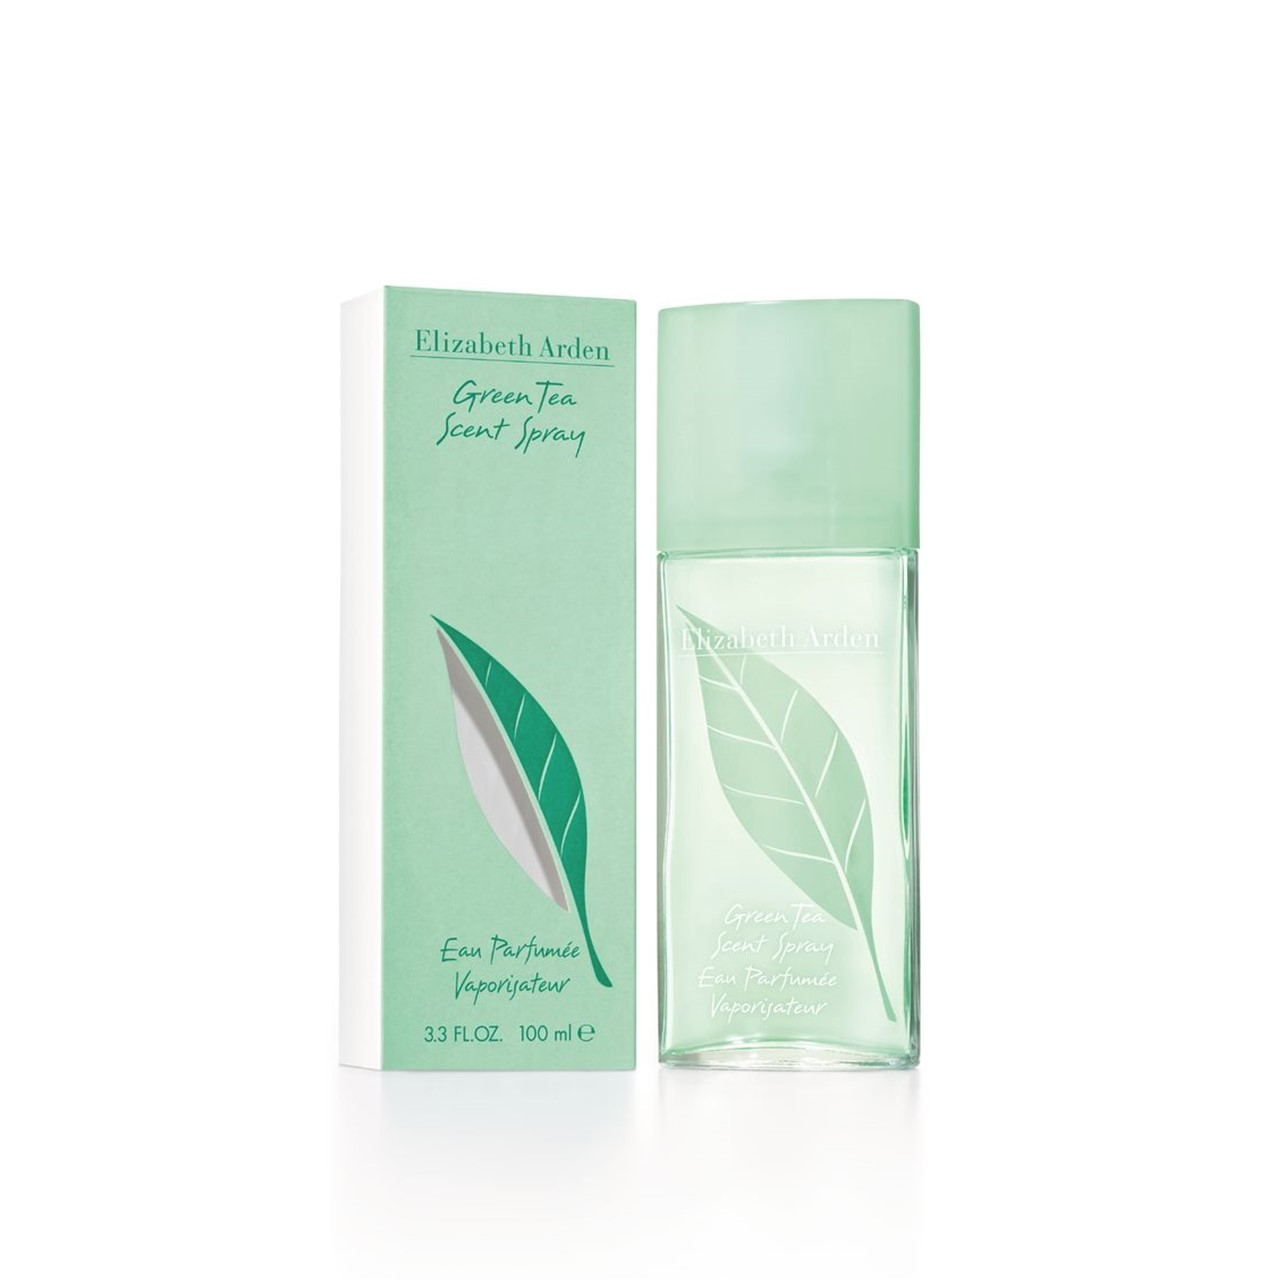 Elizabeth Arden Green Tea Scent Spray Eau Parfumée 100ml (3.38fl oz)